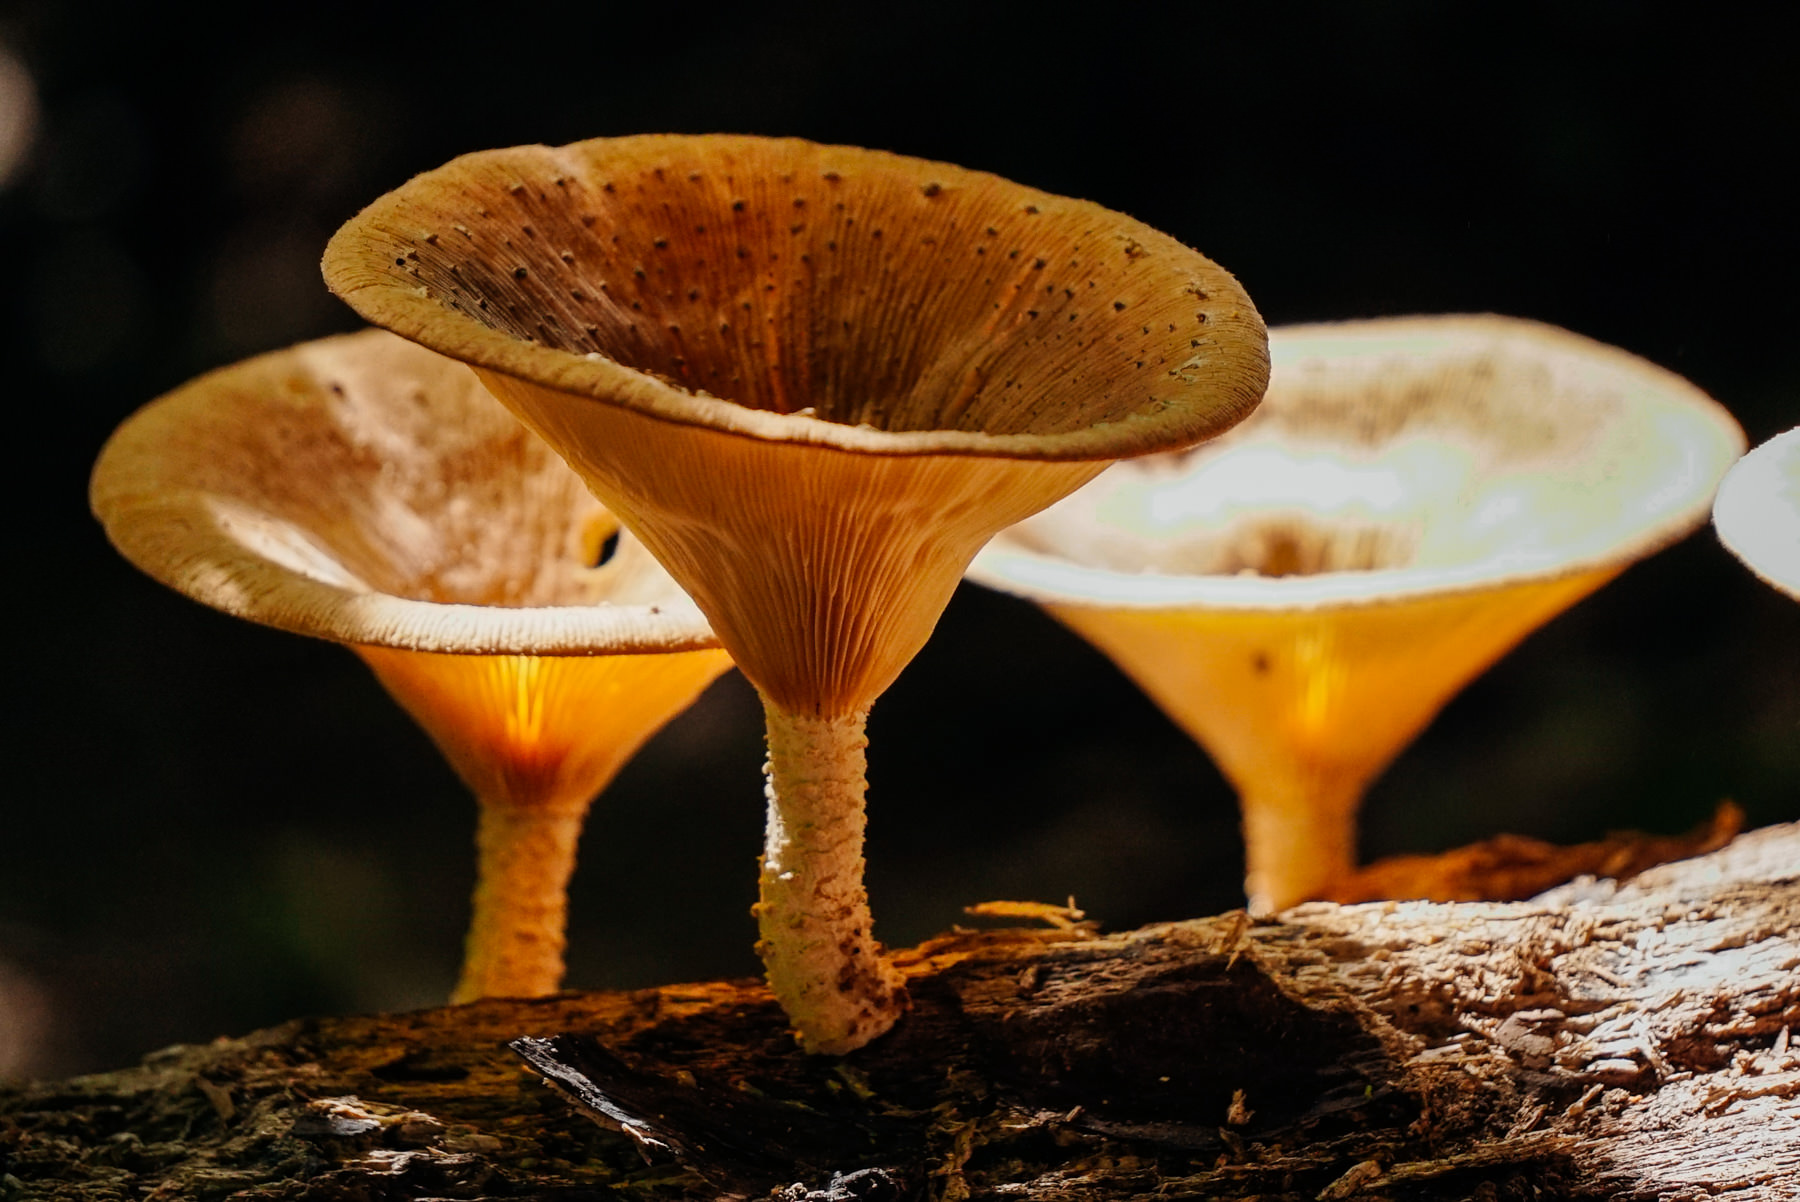 Glowing Sumatra mushrooms